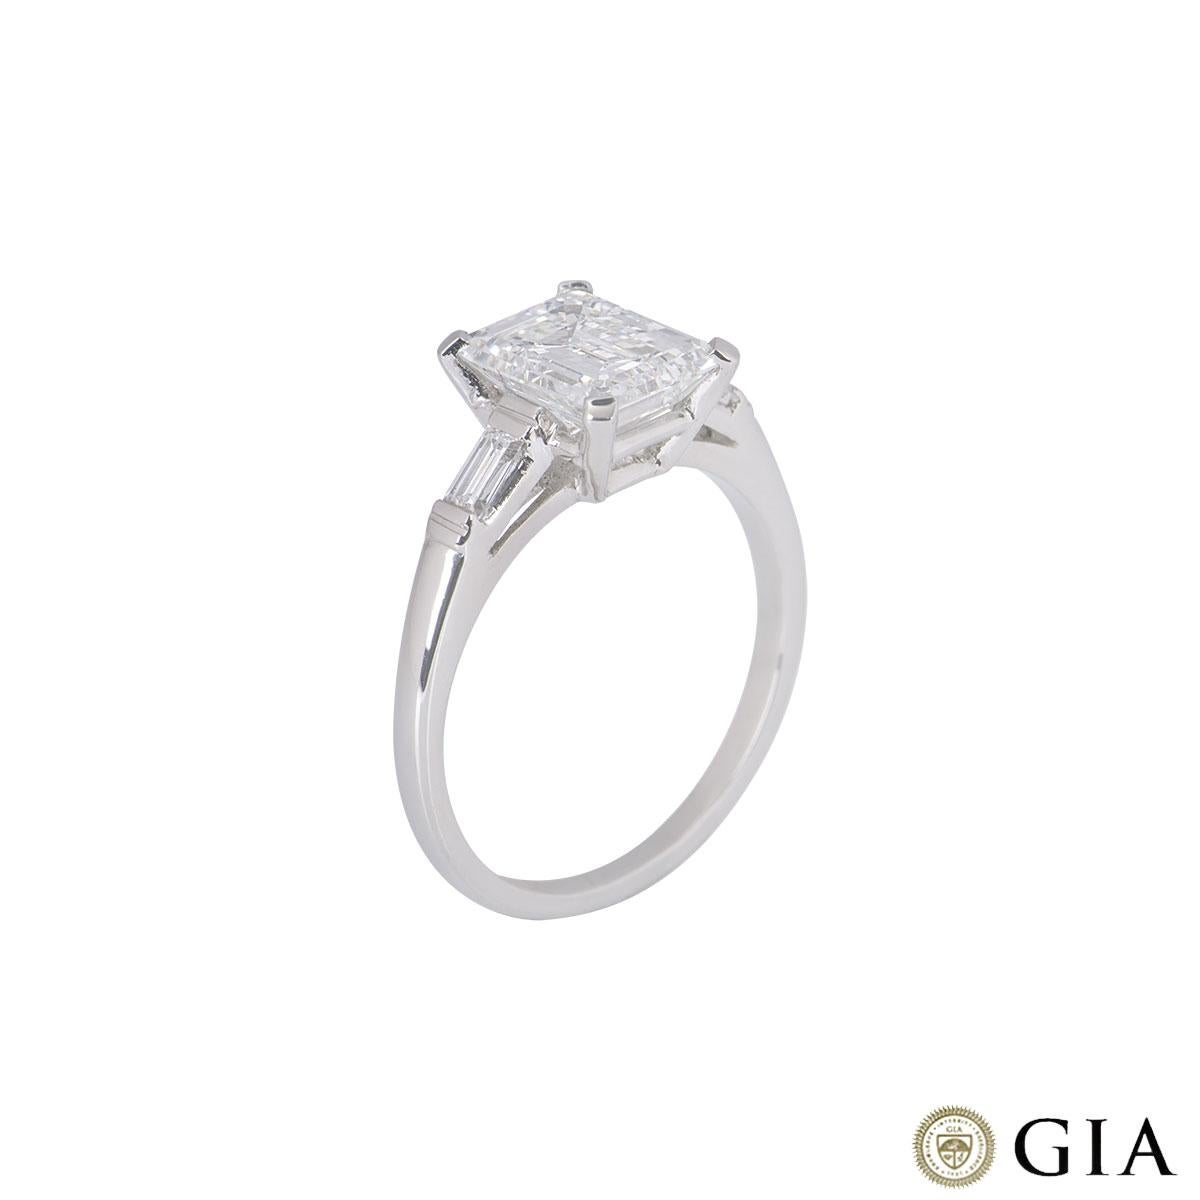 GIA Certified Platinum Emerald Cut Diamond Engagement Ring 1.92 Carat F/VVS2 1